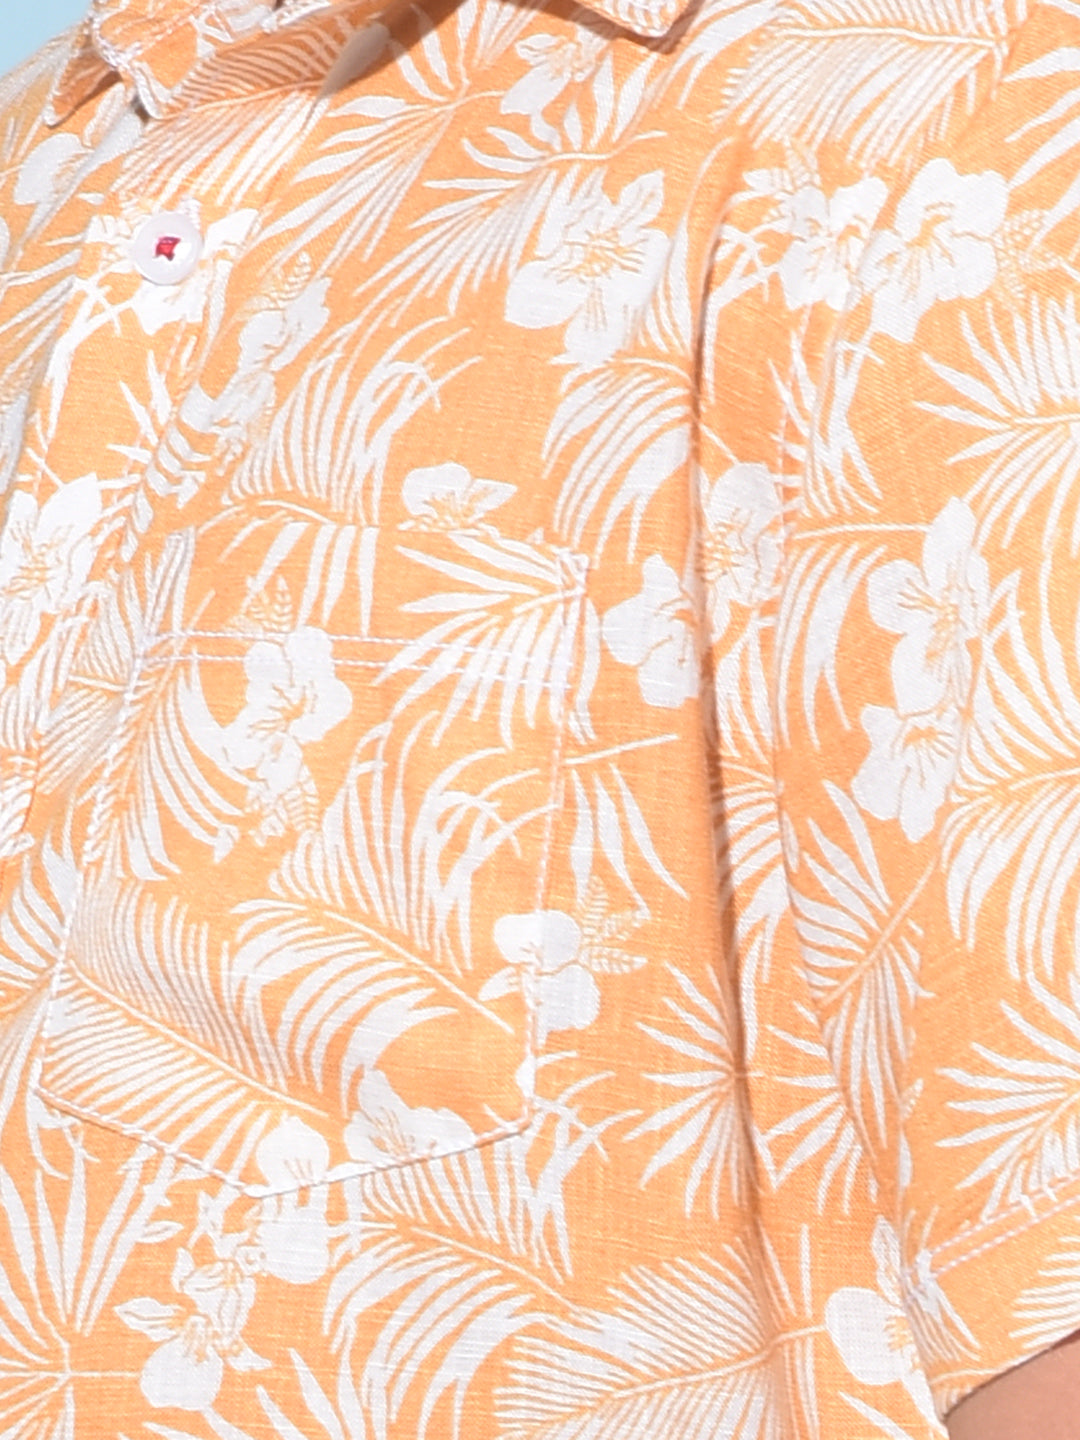 Orange Floral Print Shirt-Boys Shirts-Crimsoune Club